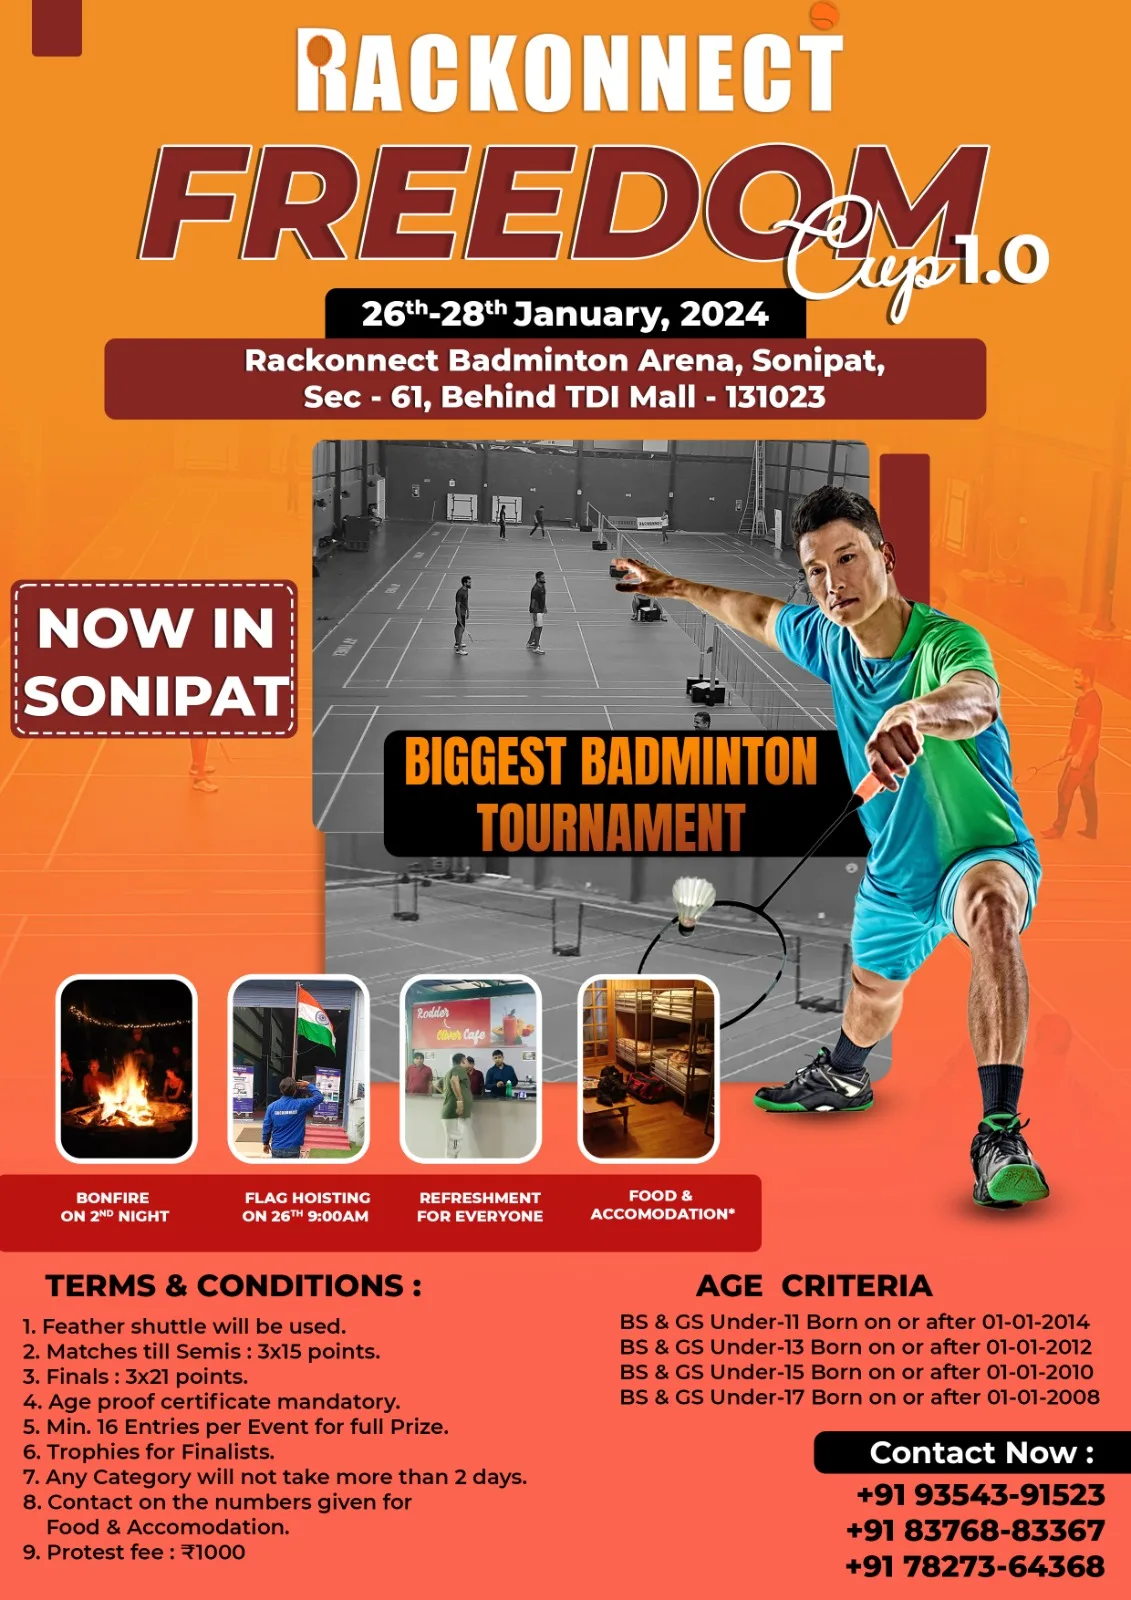 Rackonnect Badminton Freedom Cup-TN